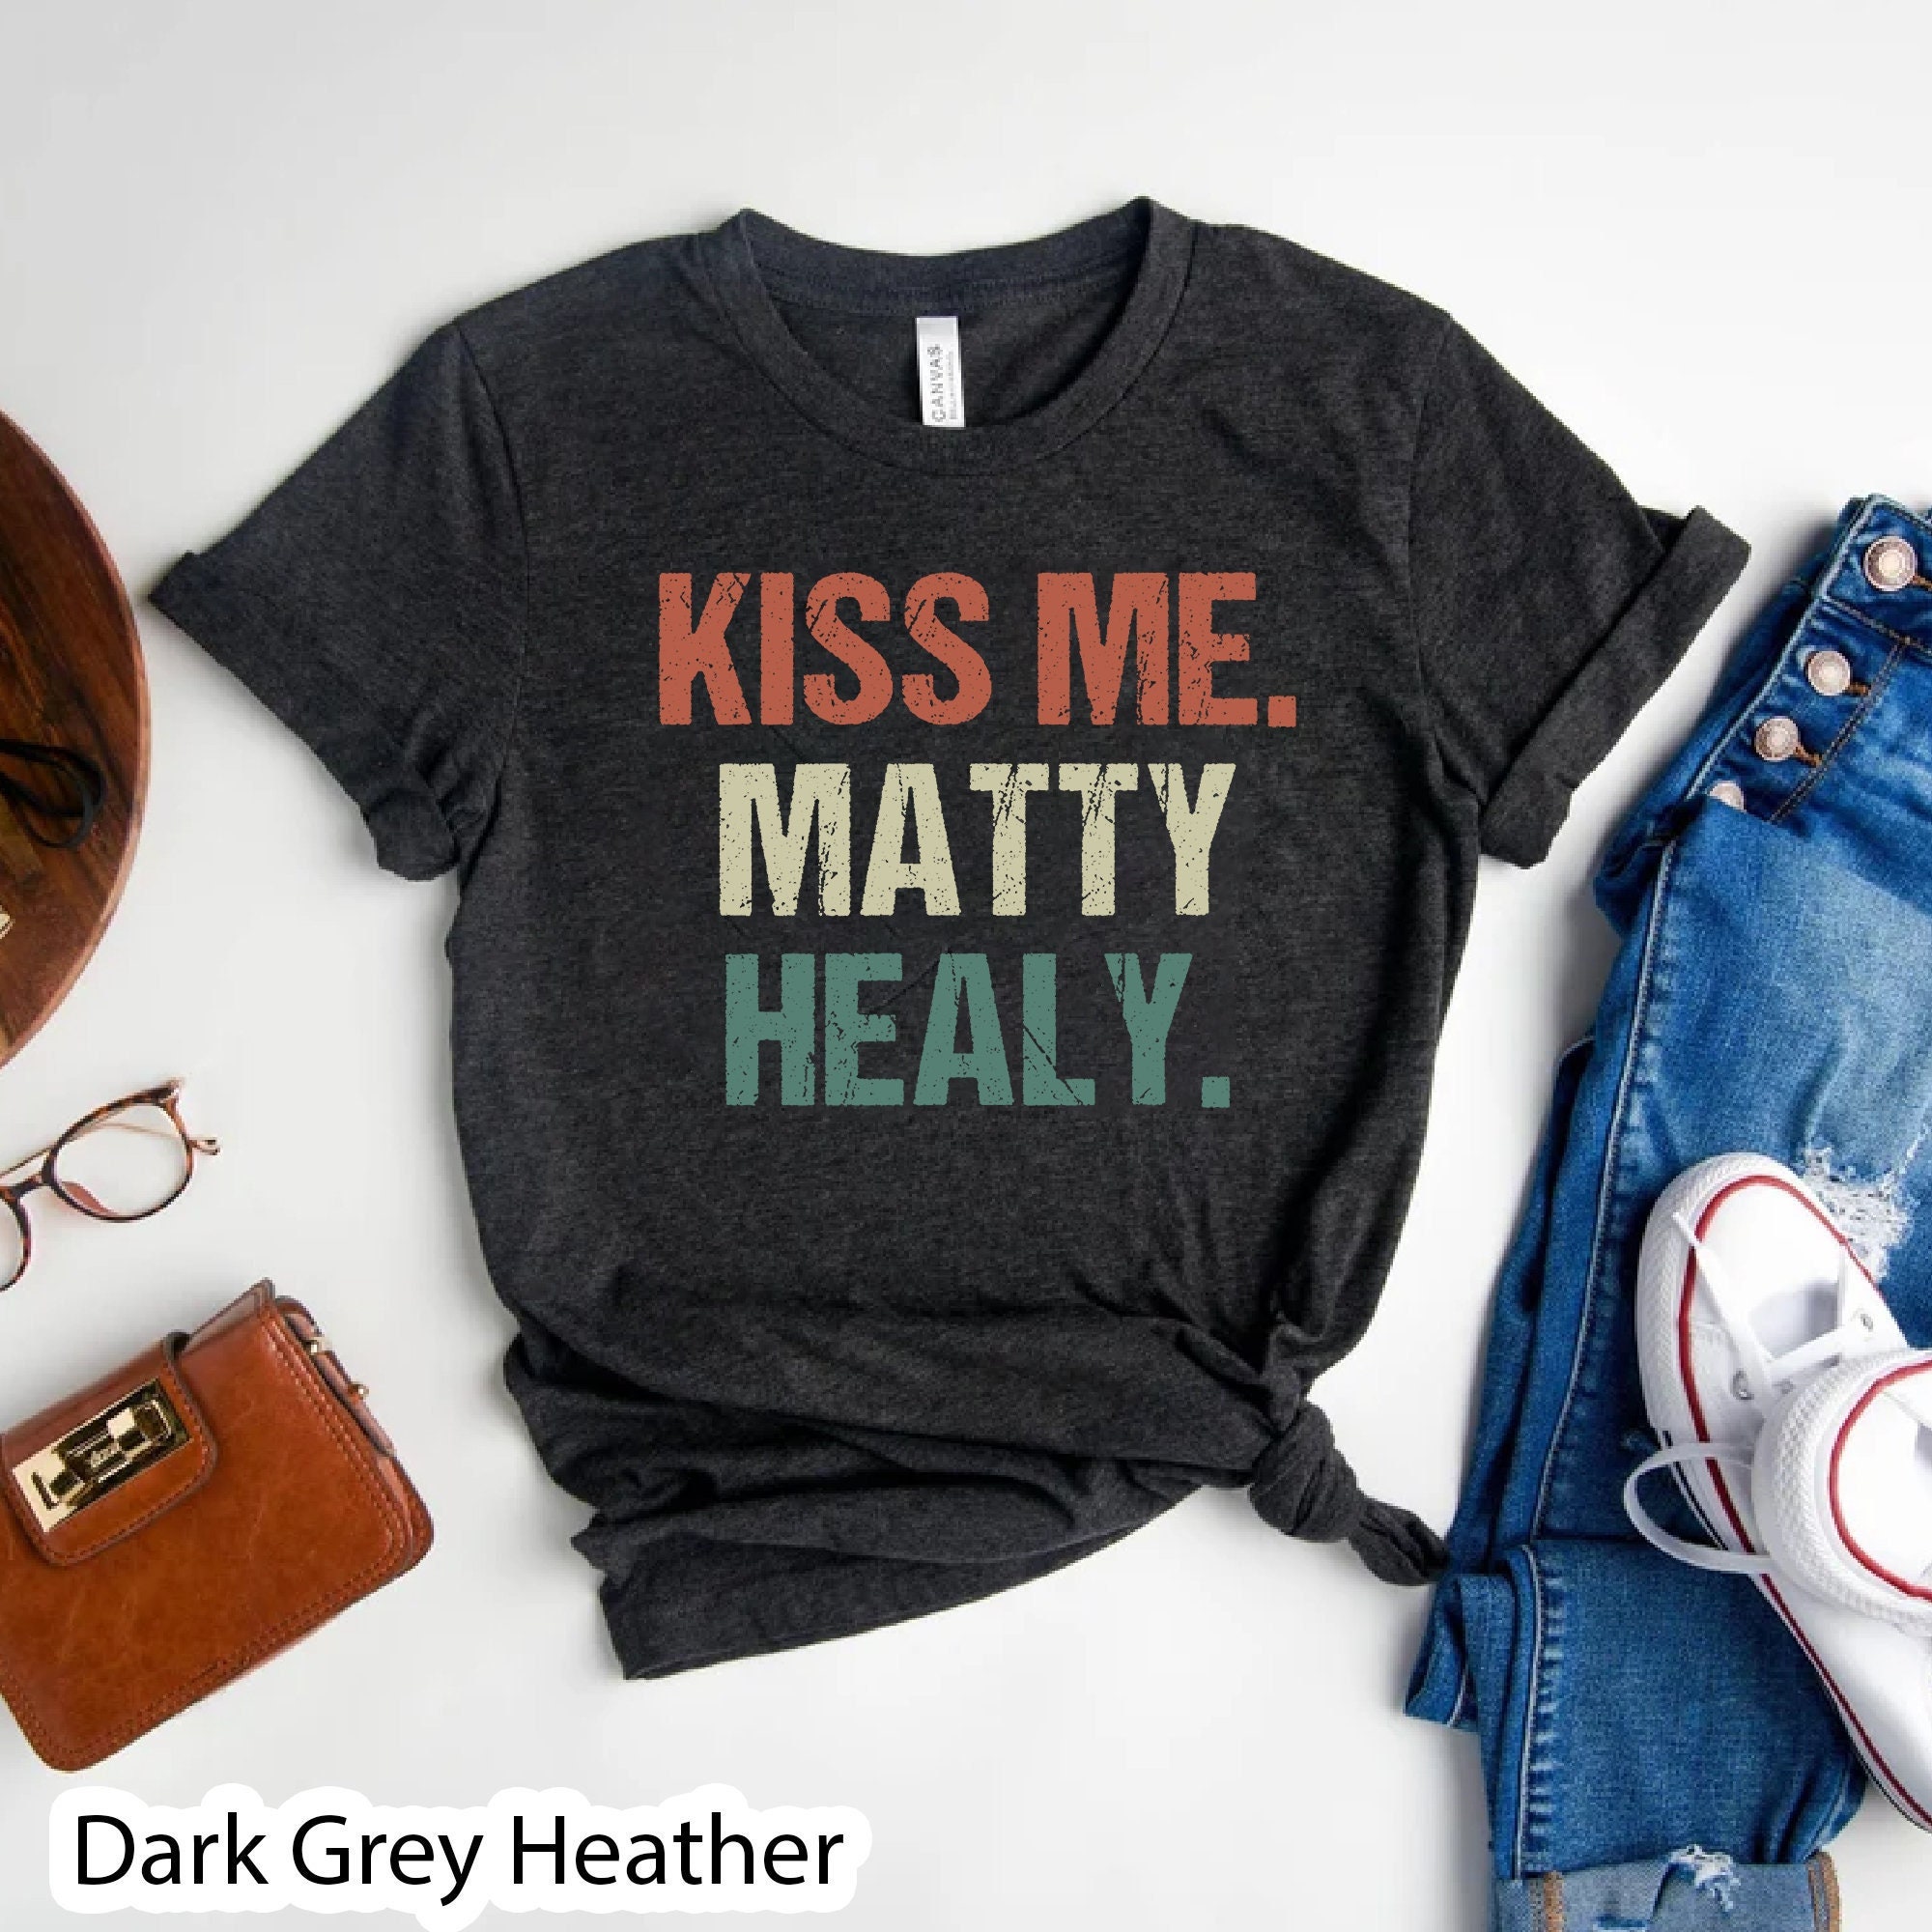 Discover The 1975 Inspired Shirt, The 1975 Matt Healy Shirt